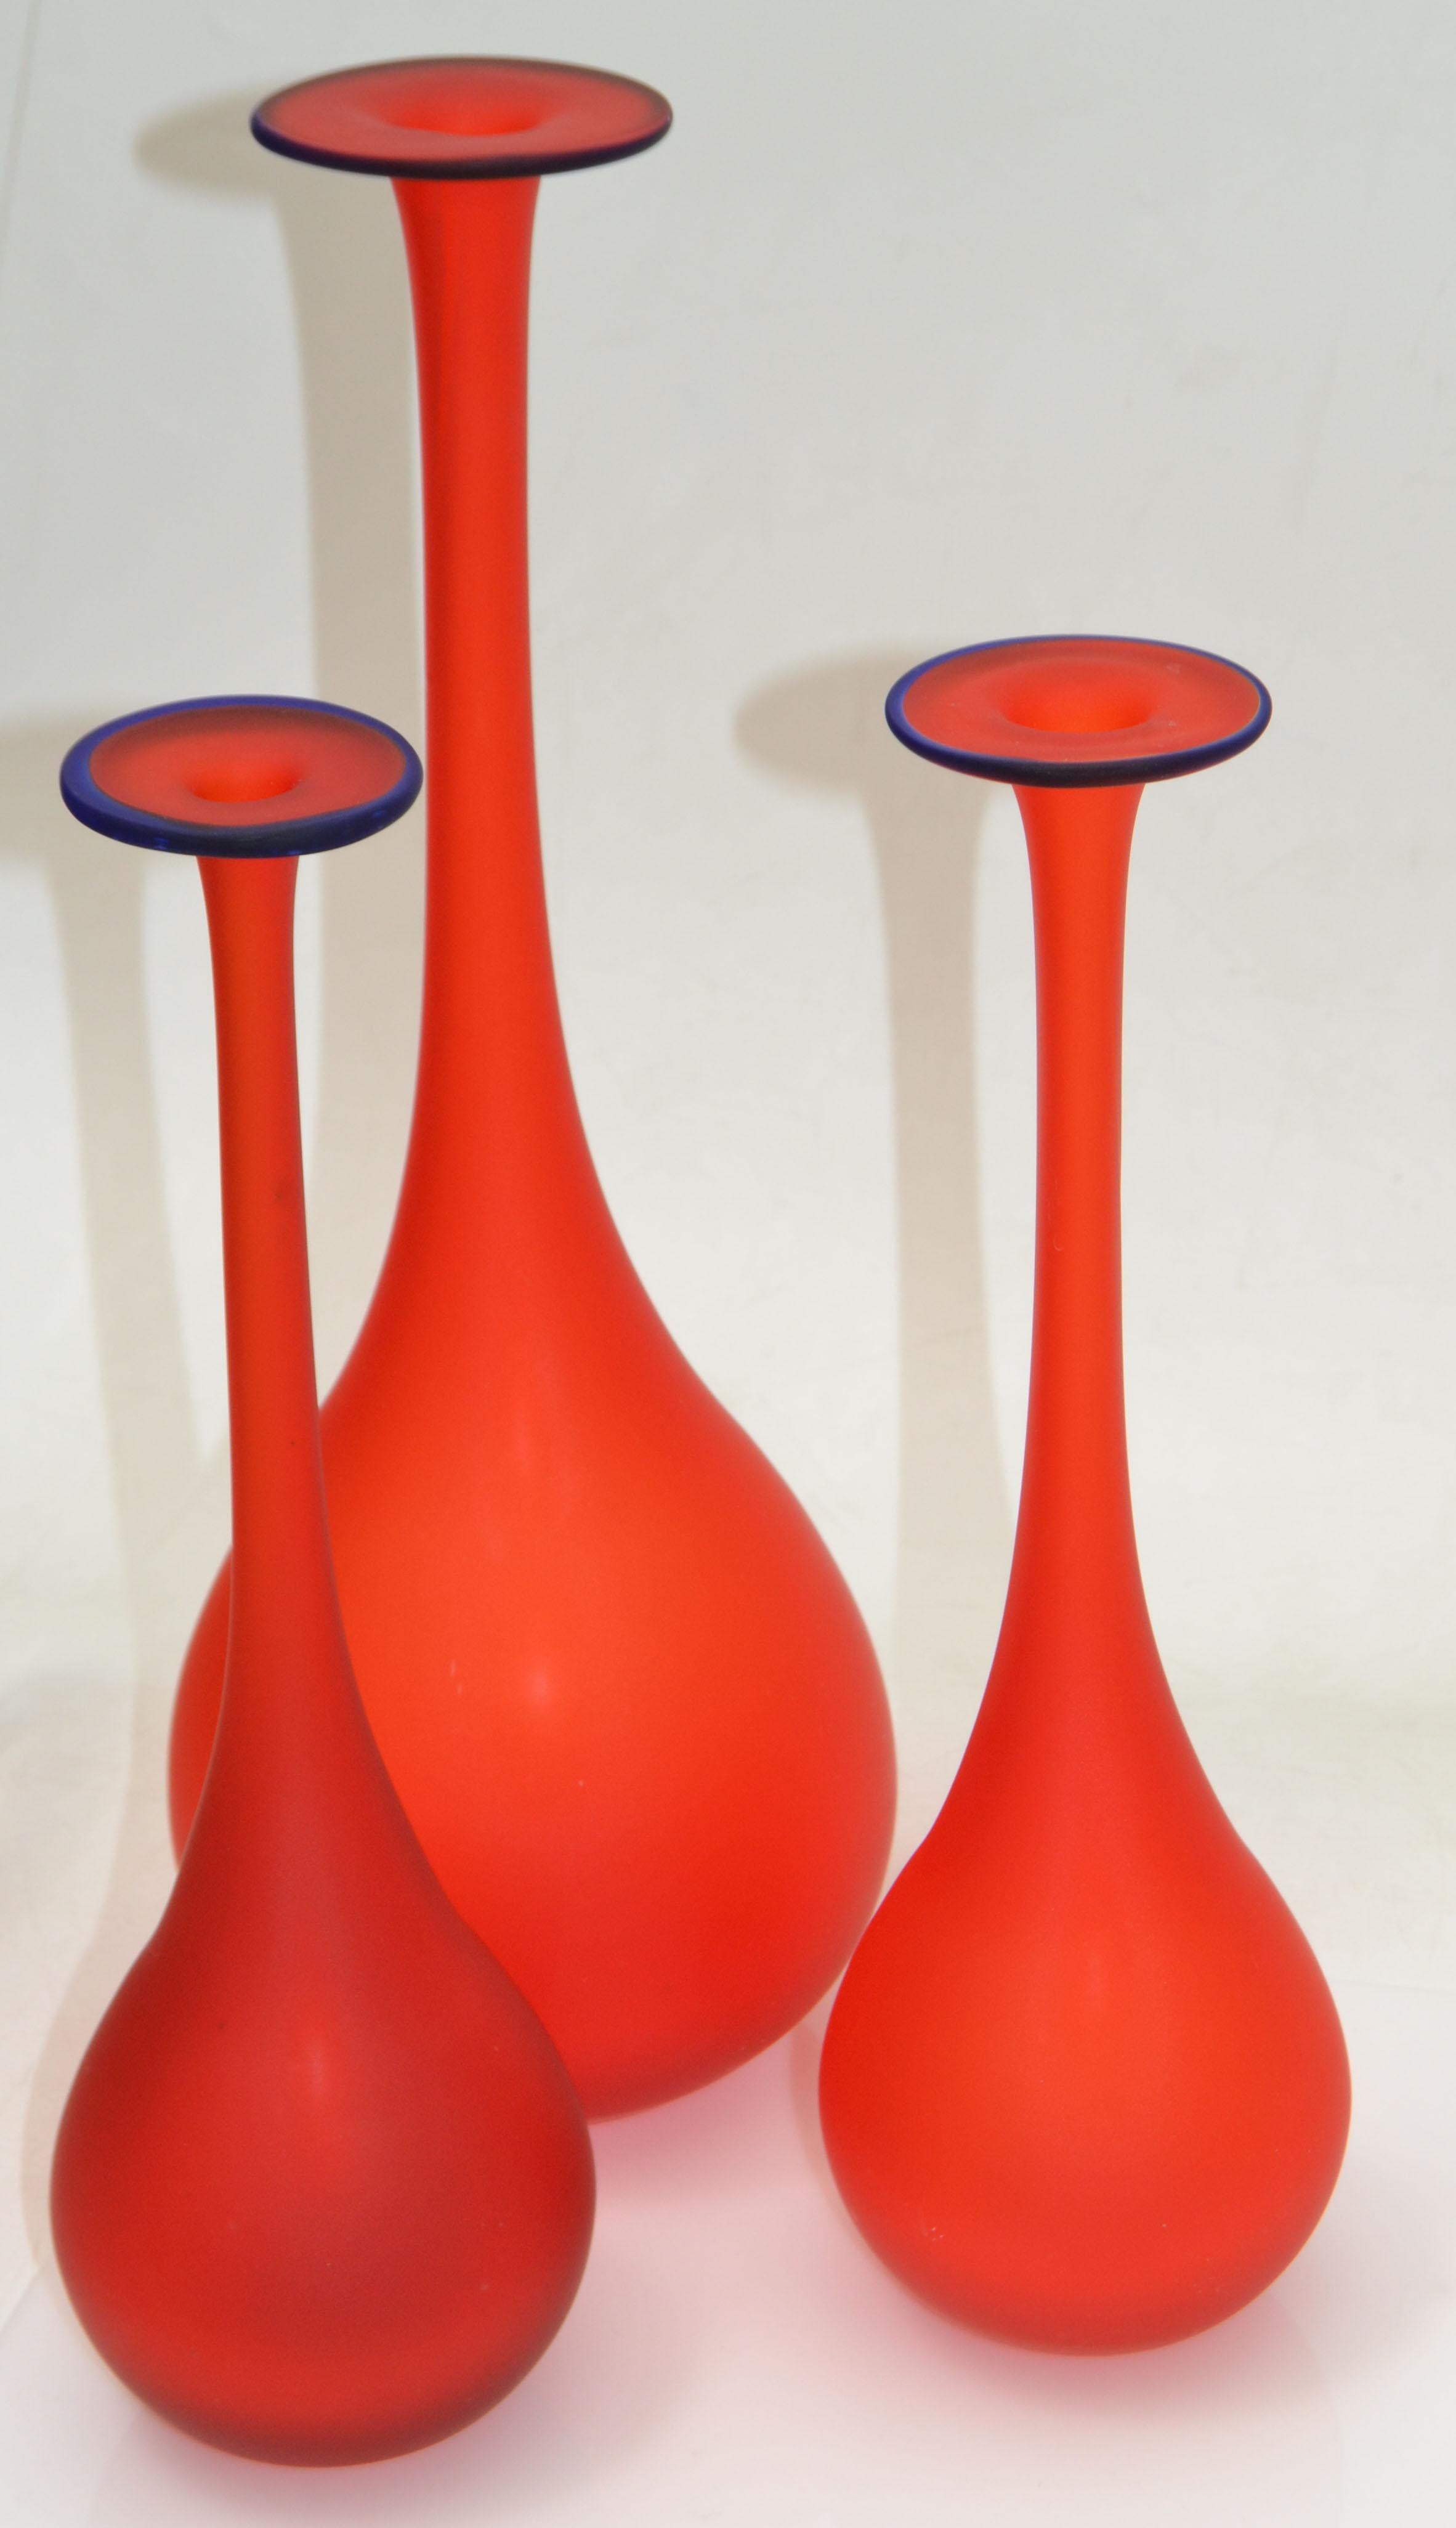 3 Nesting Vases Moretti Style Translucent Red & Blue Satin Glass Bud Vases Italy For Sale 2